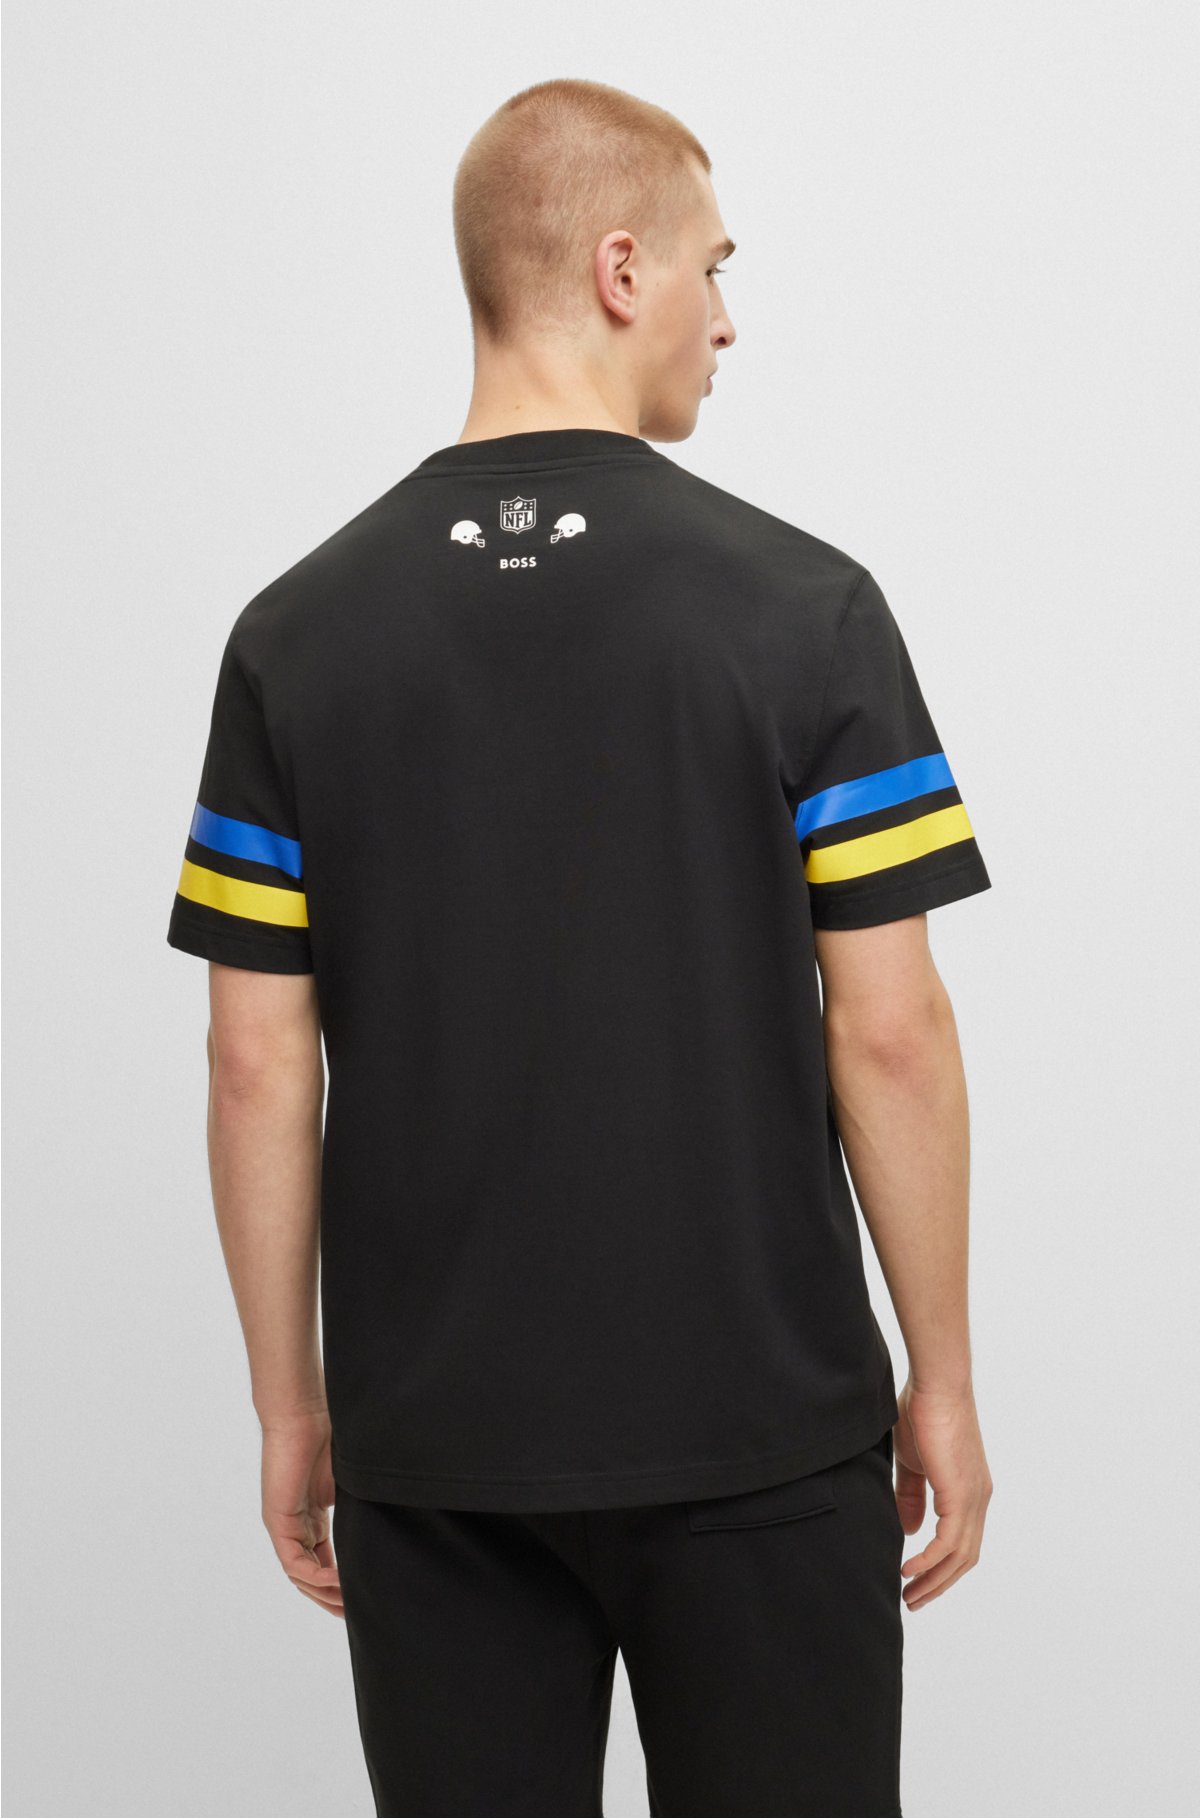 BOSS x NFL cotton-blend T-shirt with collaborative branding, Rams